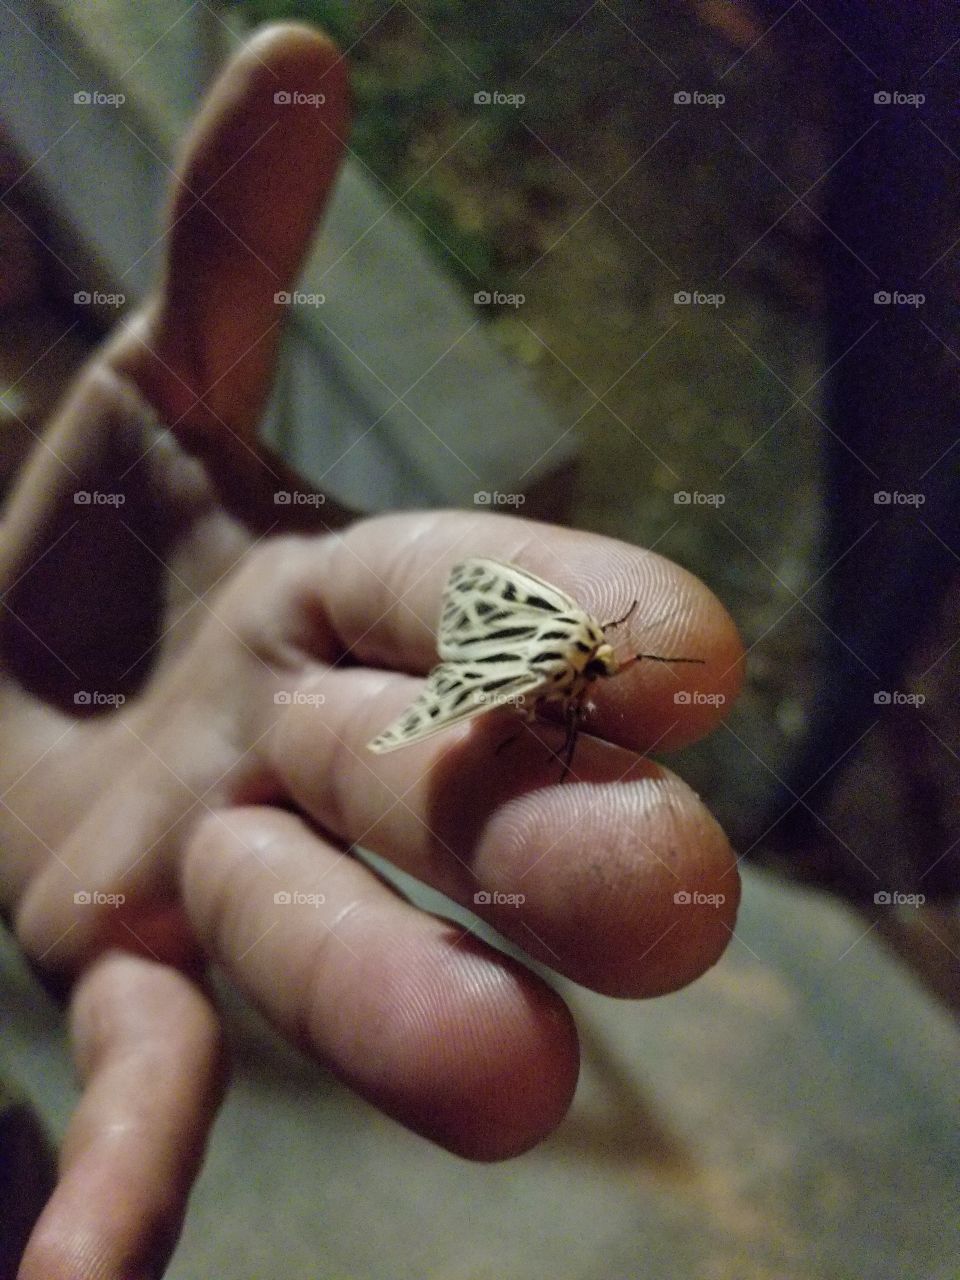 Moth on hand